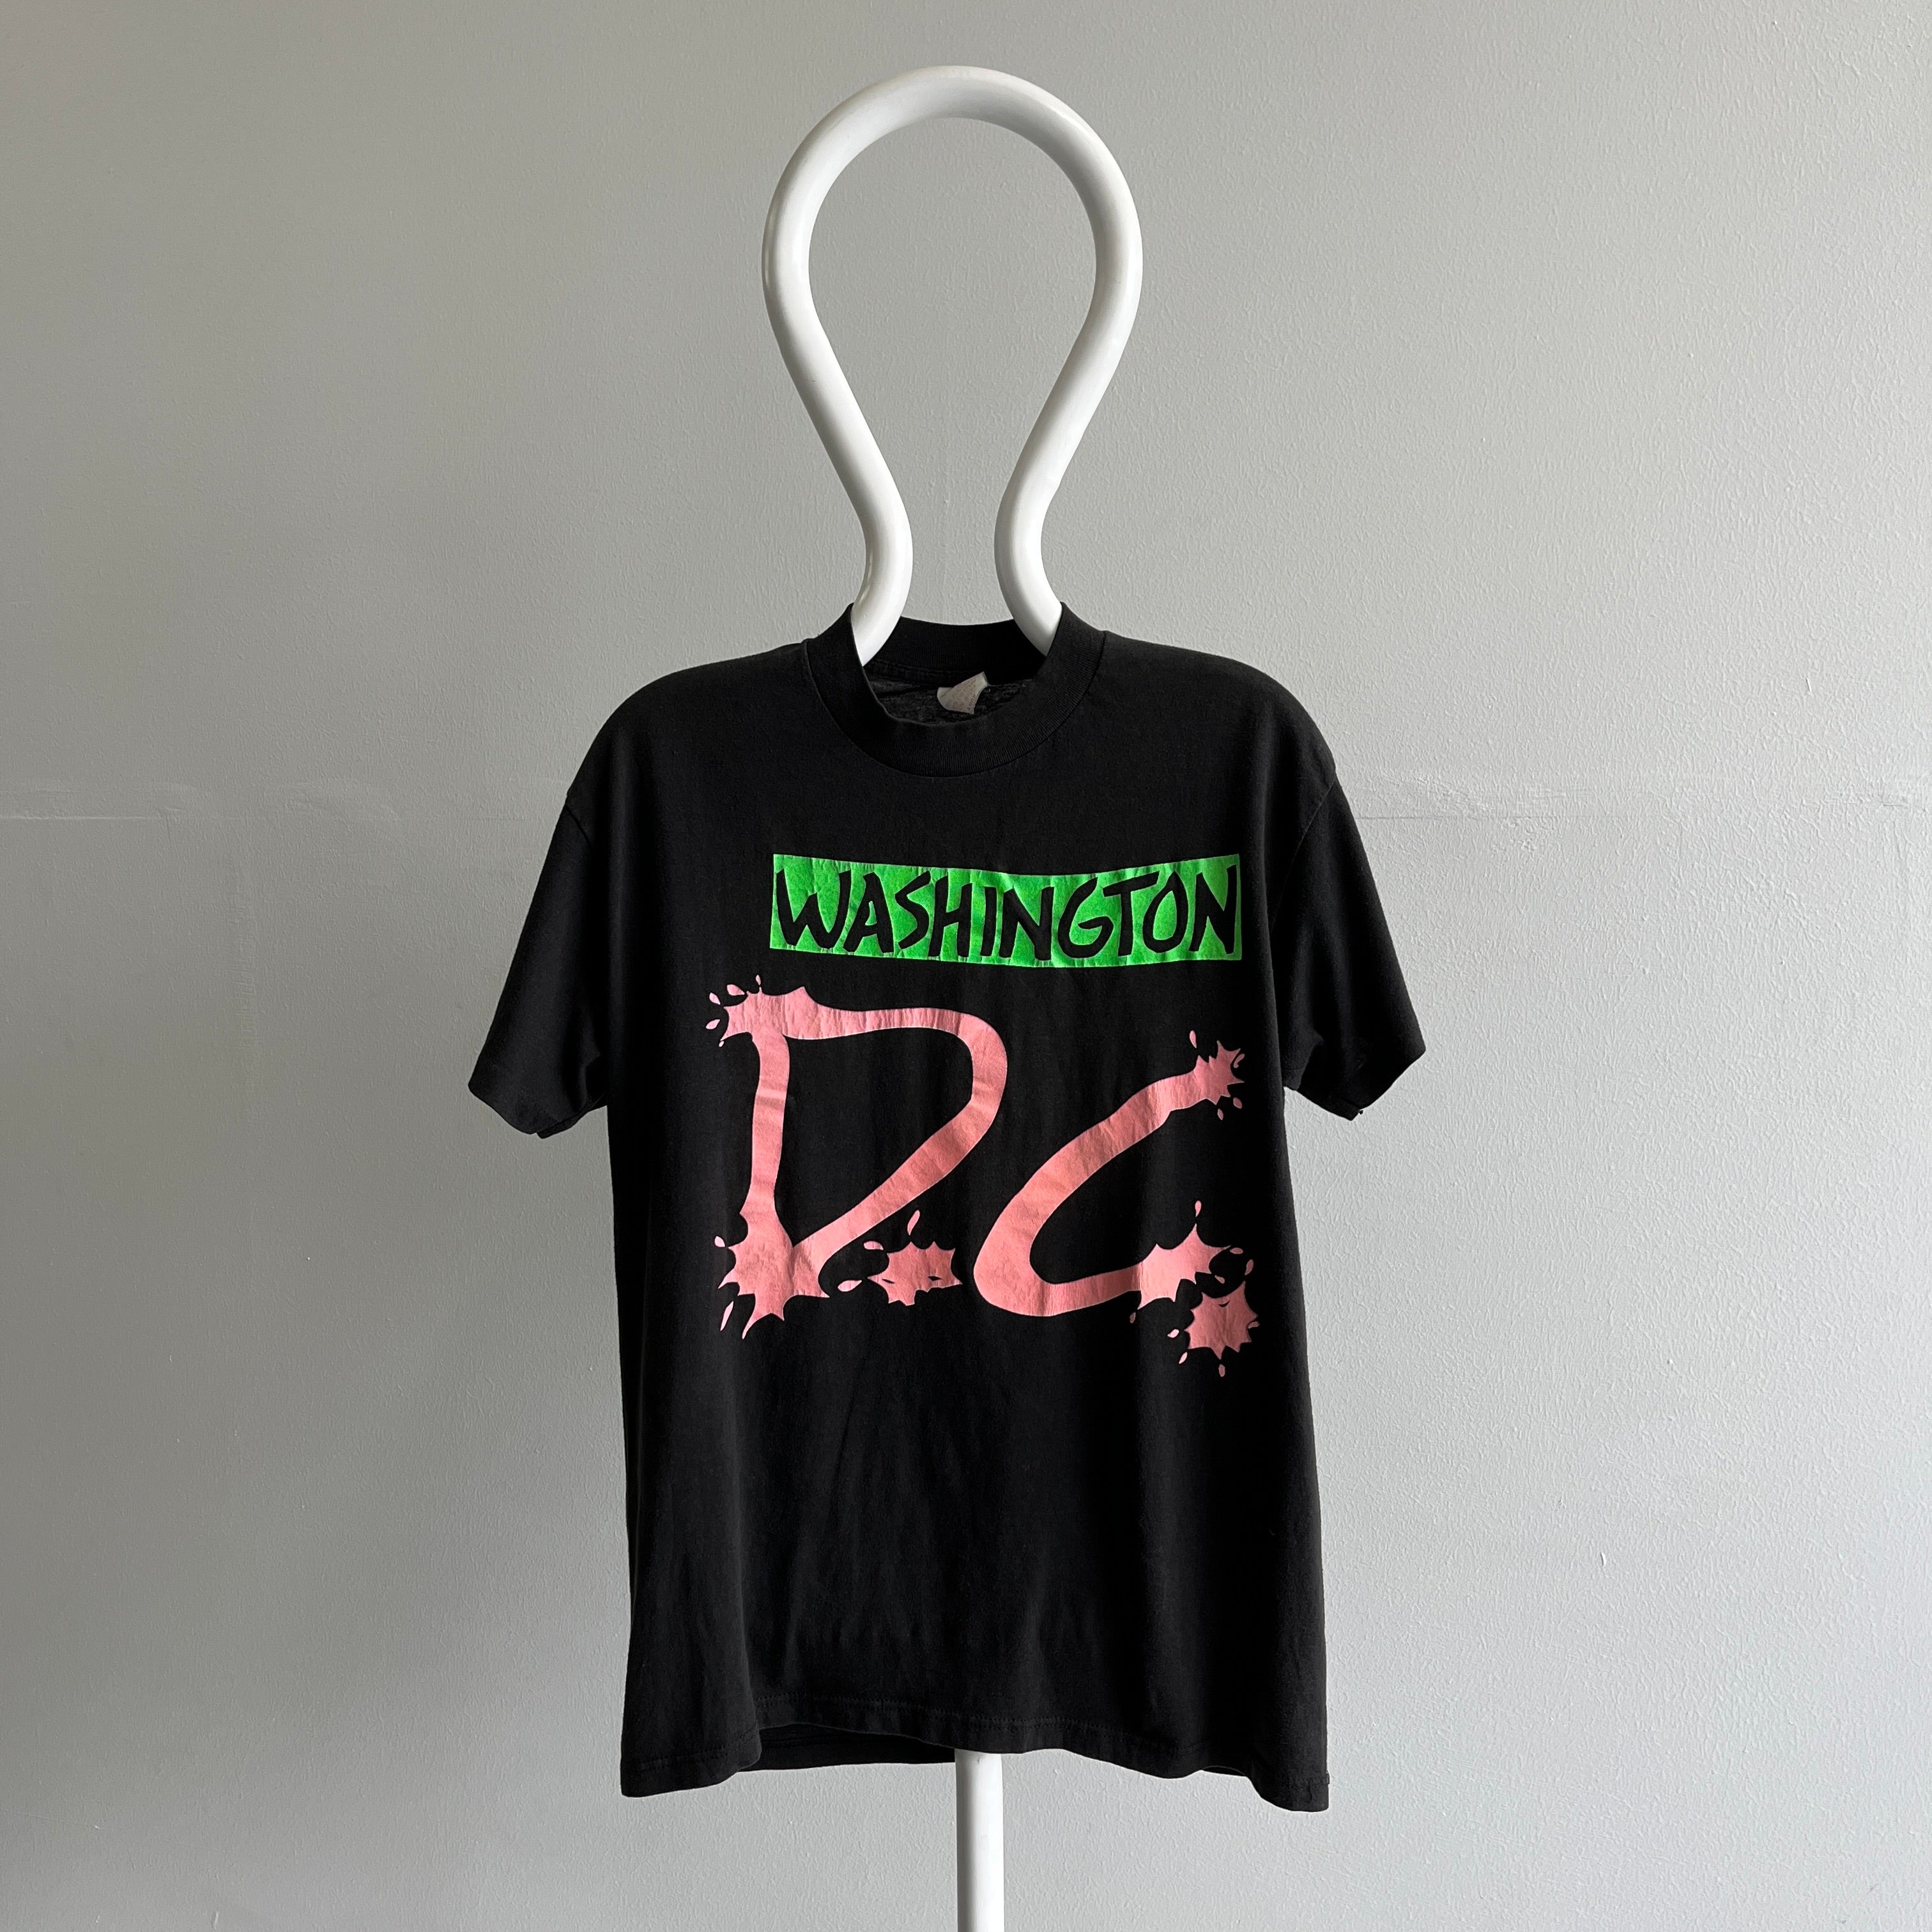 1980s Washington D.C. Tourist T-Shirt